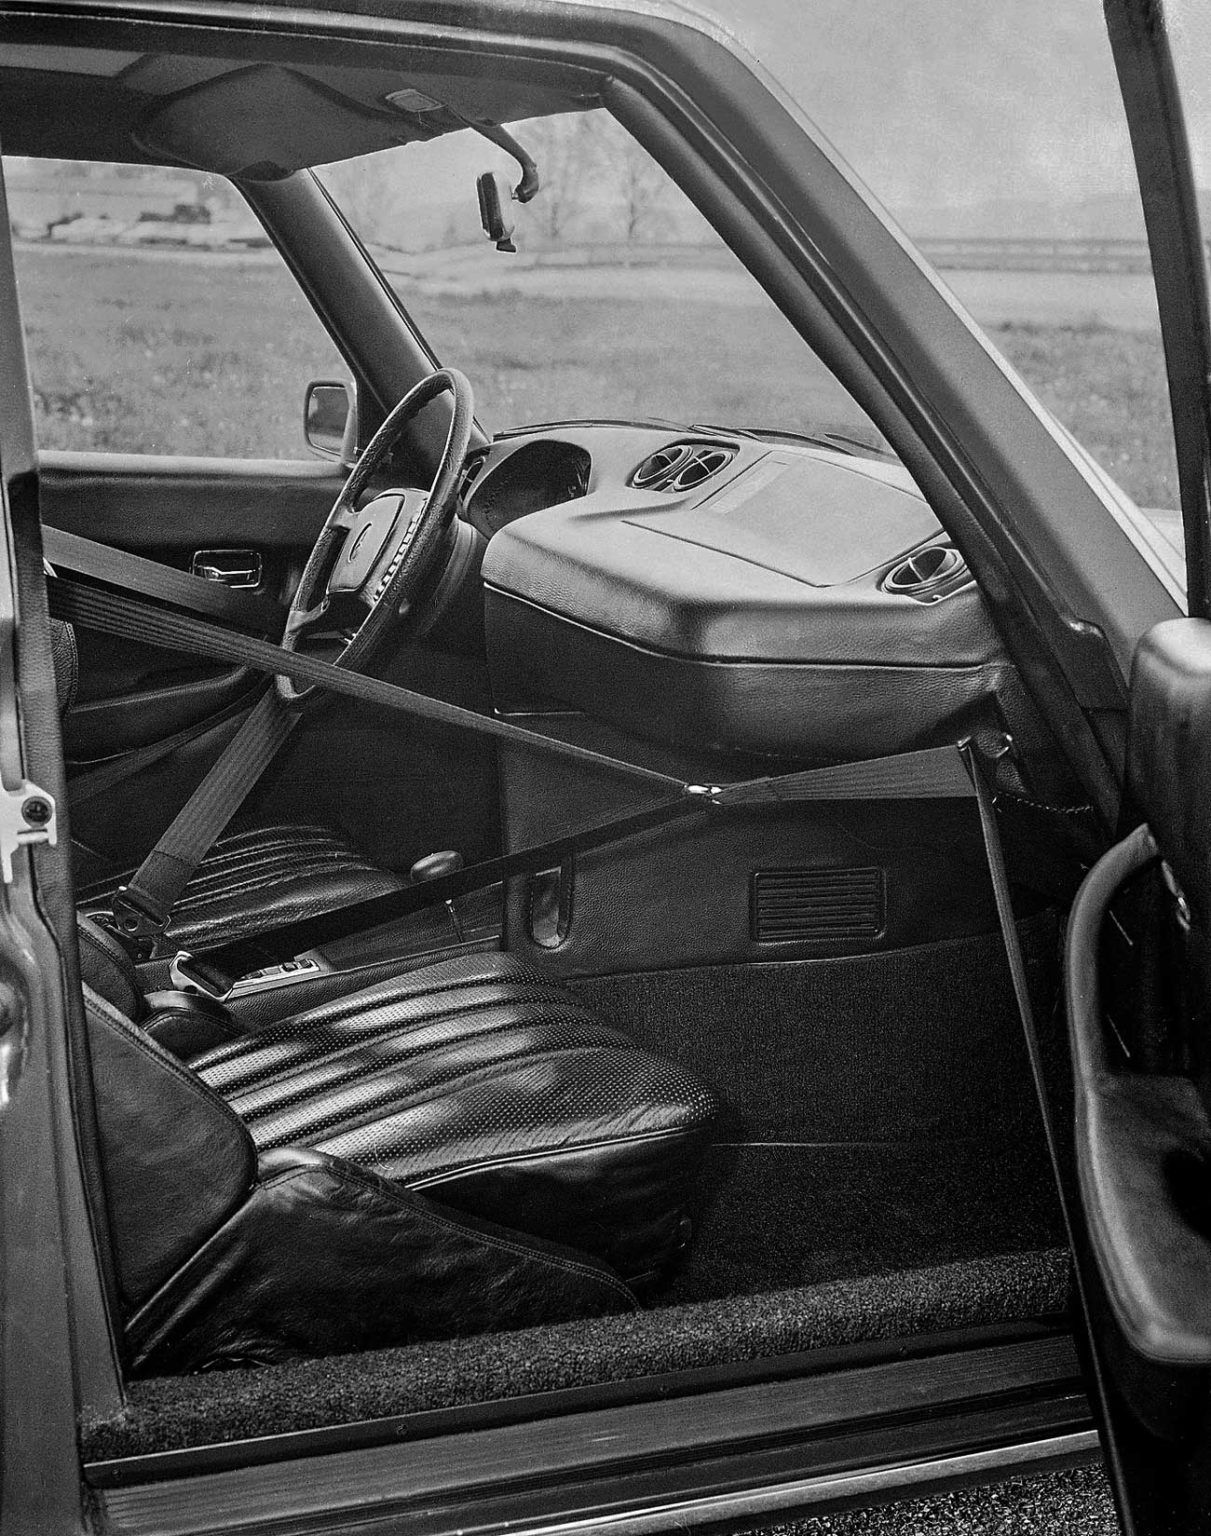 Mercedes-Benz Experimental Safety Vehicle - ESF 13 - Interior